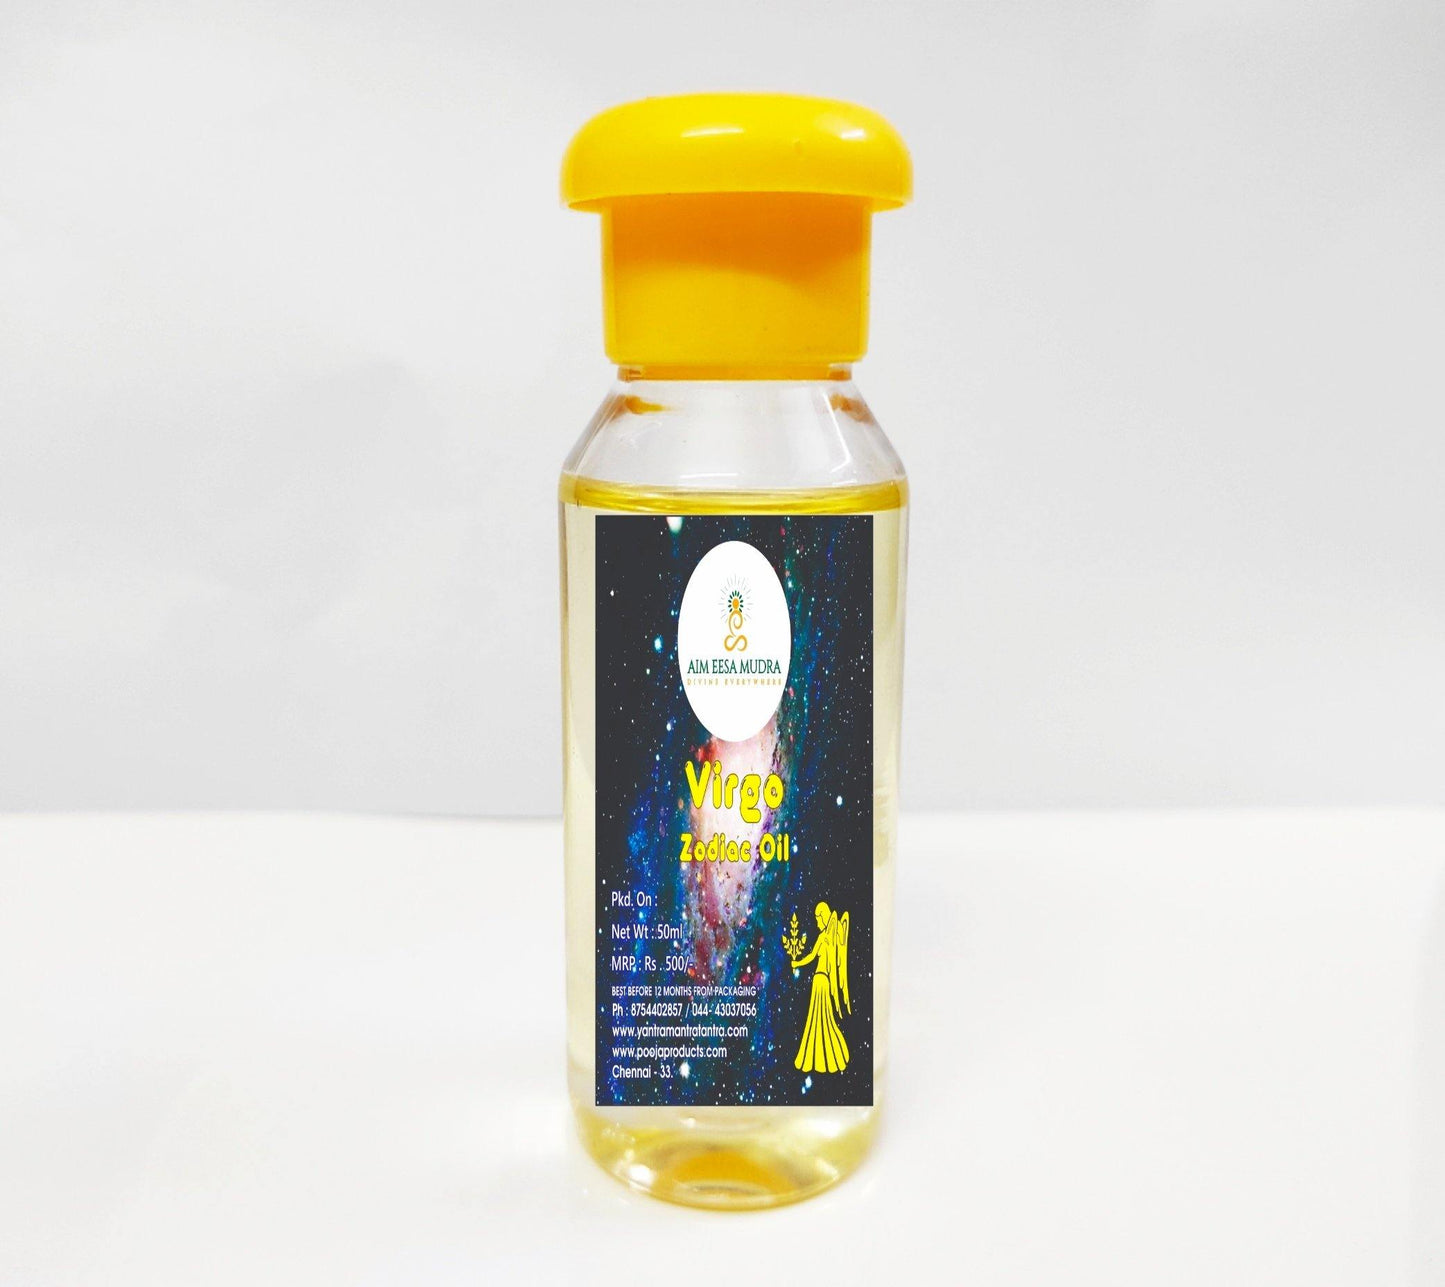 Zodiac Oil Virgo (50ml)  (𝗧𝗛𝗜𝗦 𝗣𝗥𝗢𝗗𝗨𝗖𝗧 𝗔𝗩𝗔𝗜𝗟𝗕𝗟𝗘 𝗢𝗡𝗟𝗬 𝗜𝗡𝗦𝗜𝗗𝗘 𝗜𝗡𝗗𝗜𝗔) - PoojaProducts.com